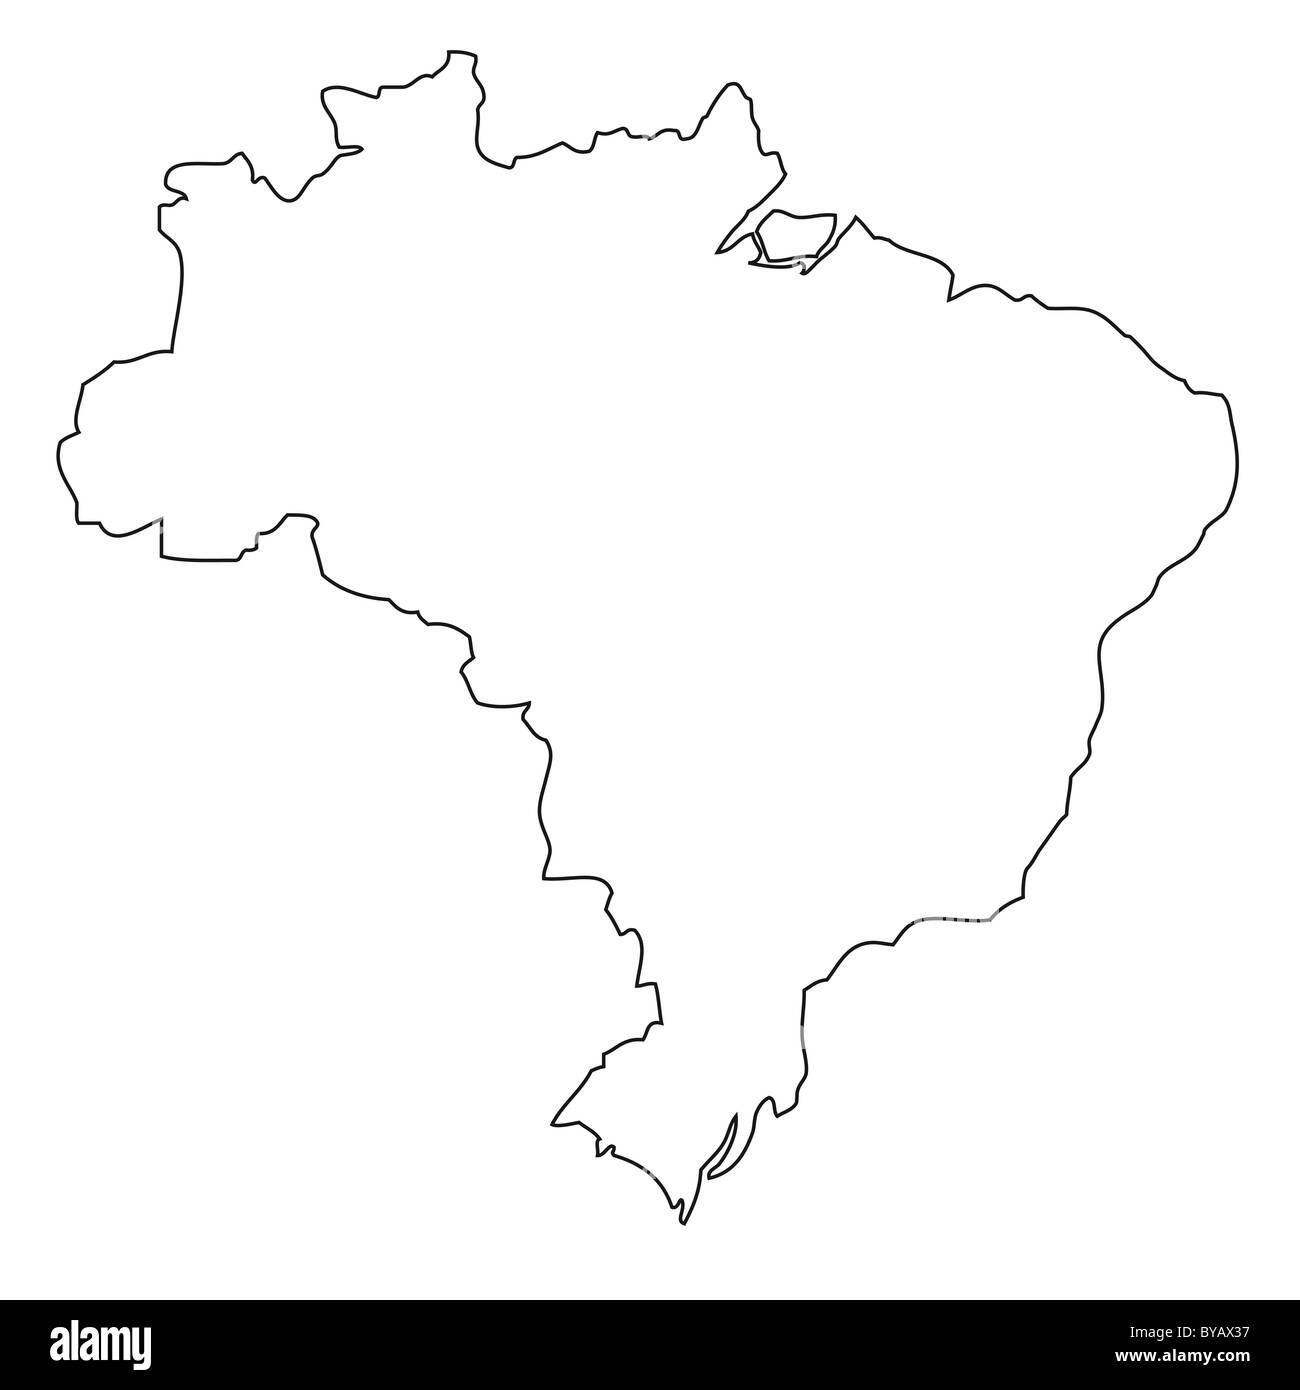 Outline, map of Brazil Stock Photo